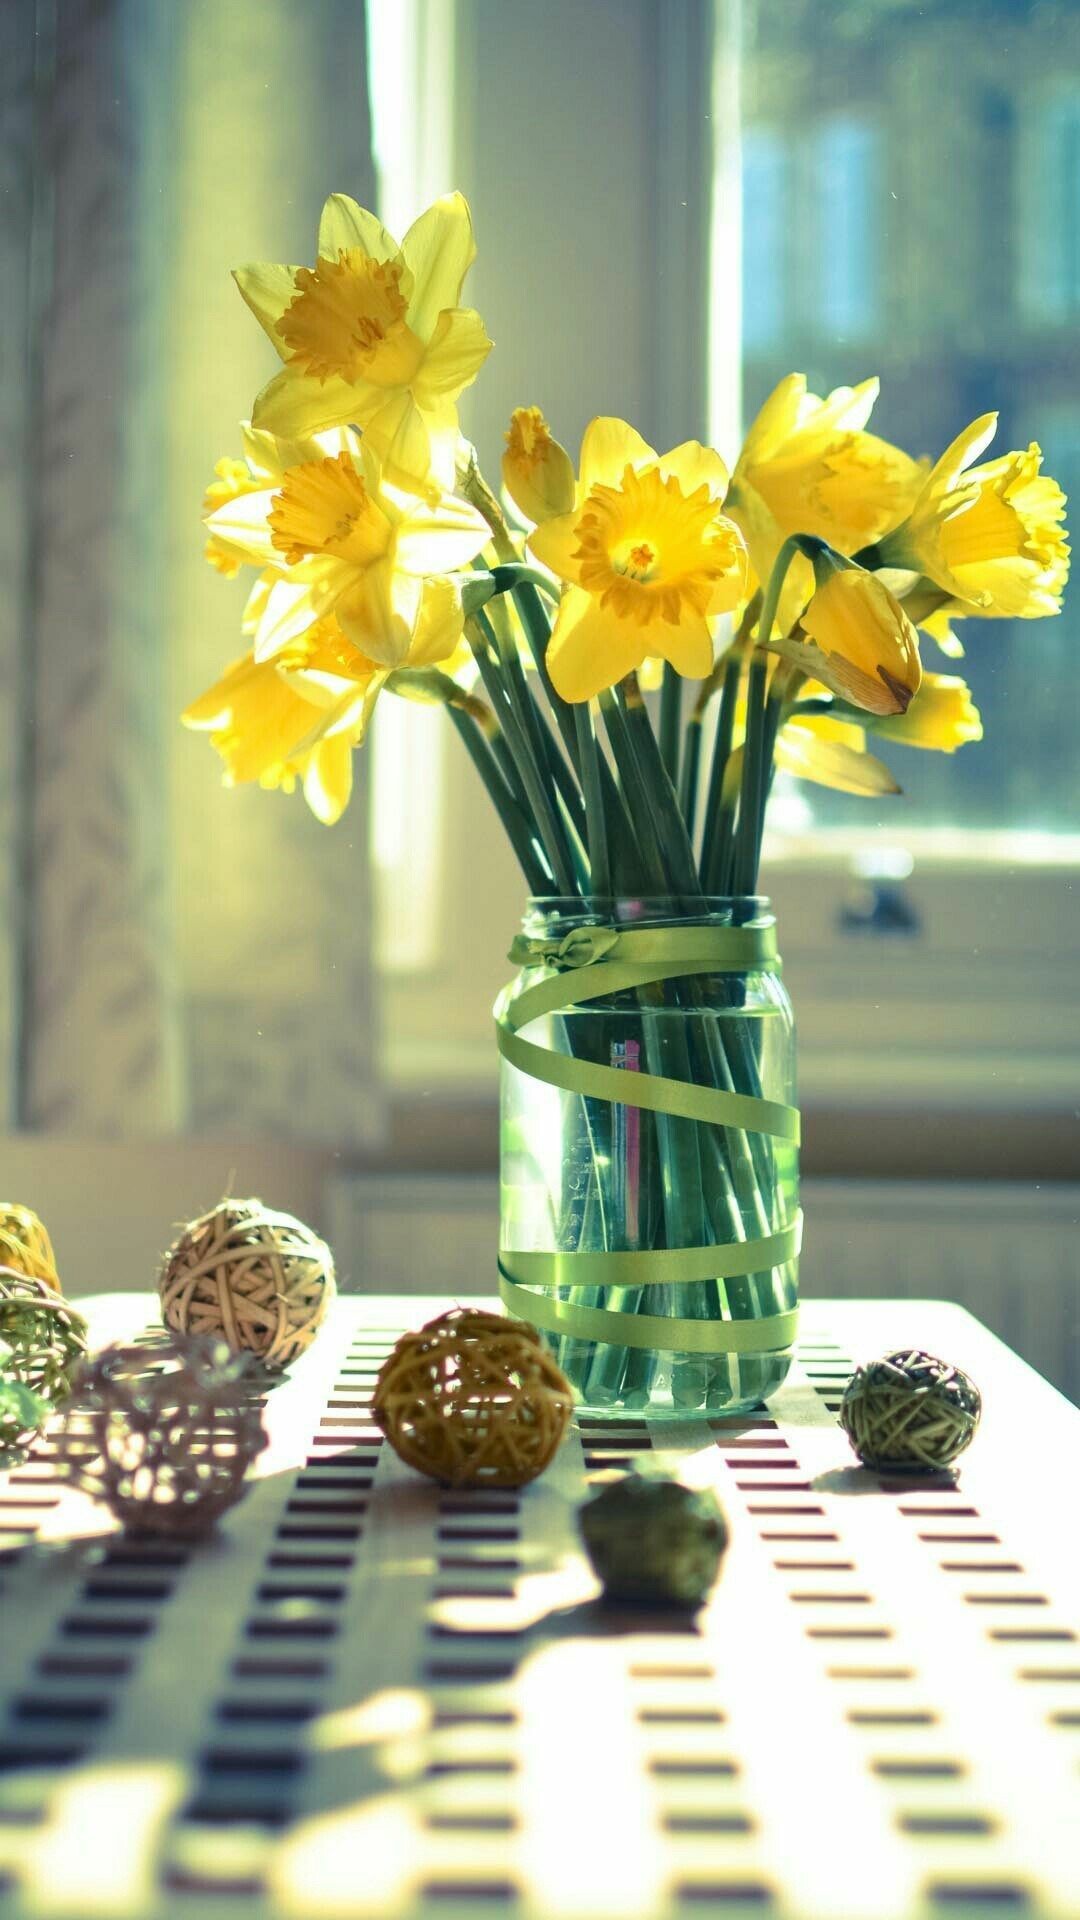 Flower Bouquet: Vase, Daffodils, Spring flowers. 1080x1920 Full HD Wallpaper.